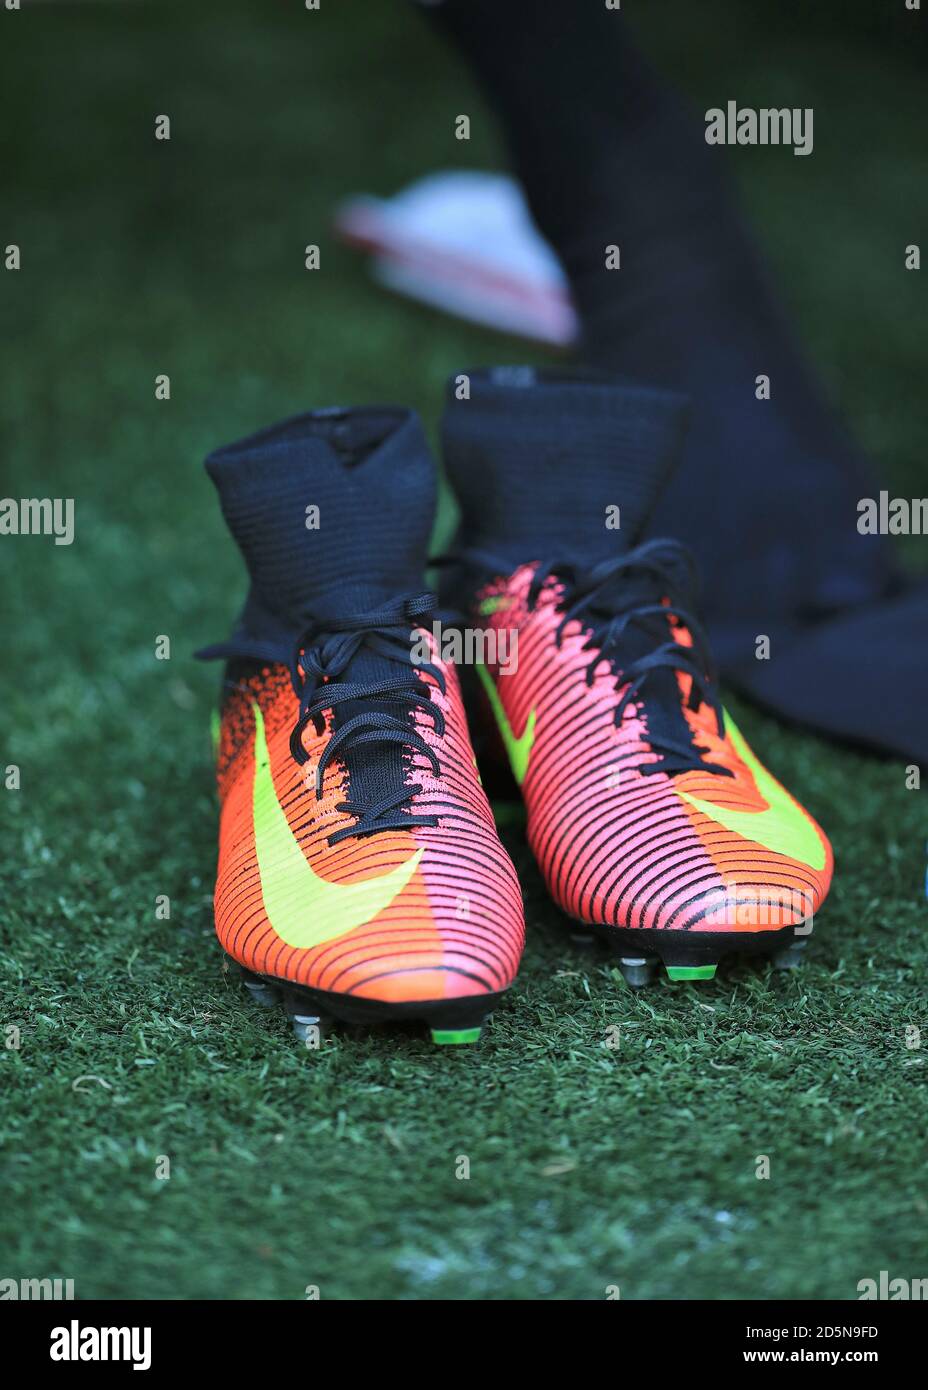 Ein Paar orangefarbene Nike Fußballschuhe Stockfotografie - Alamy